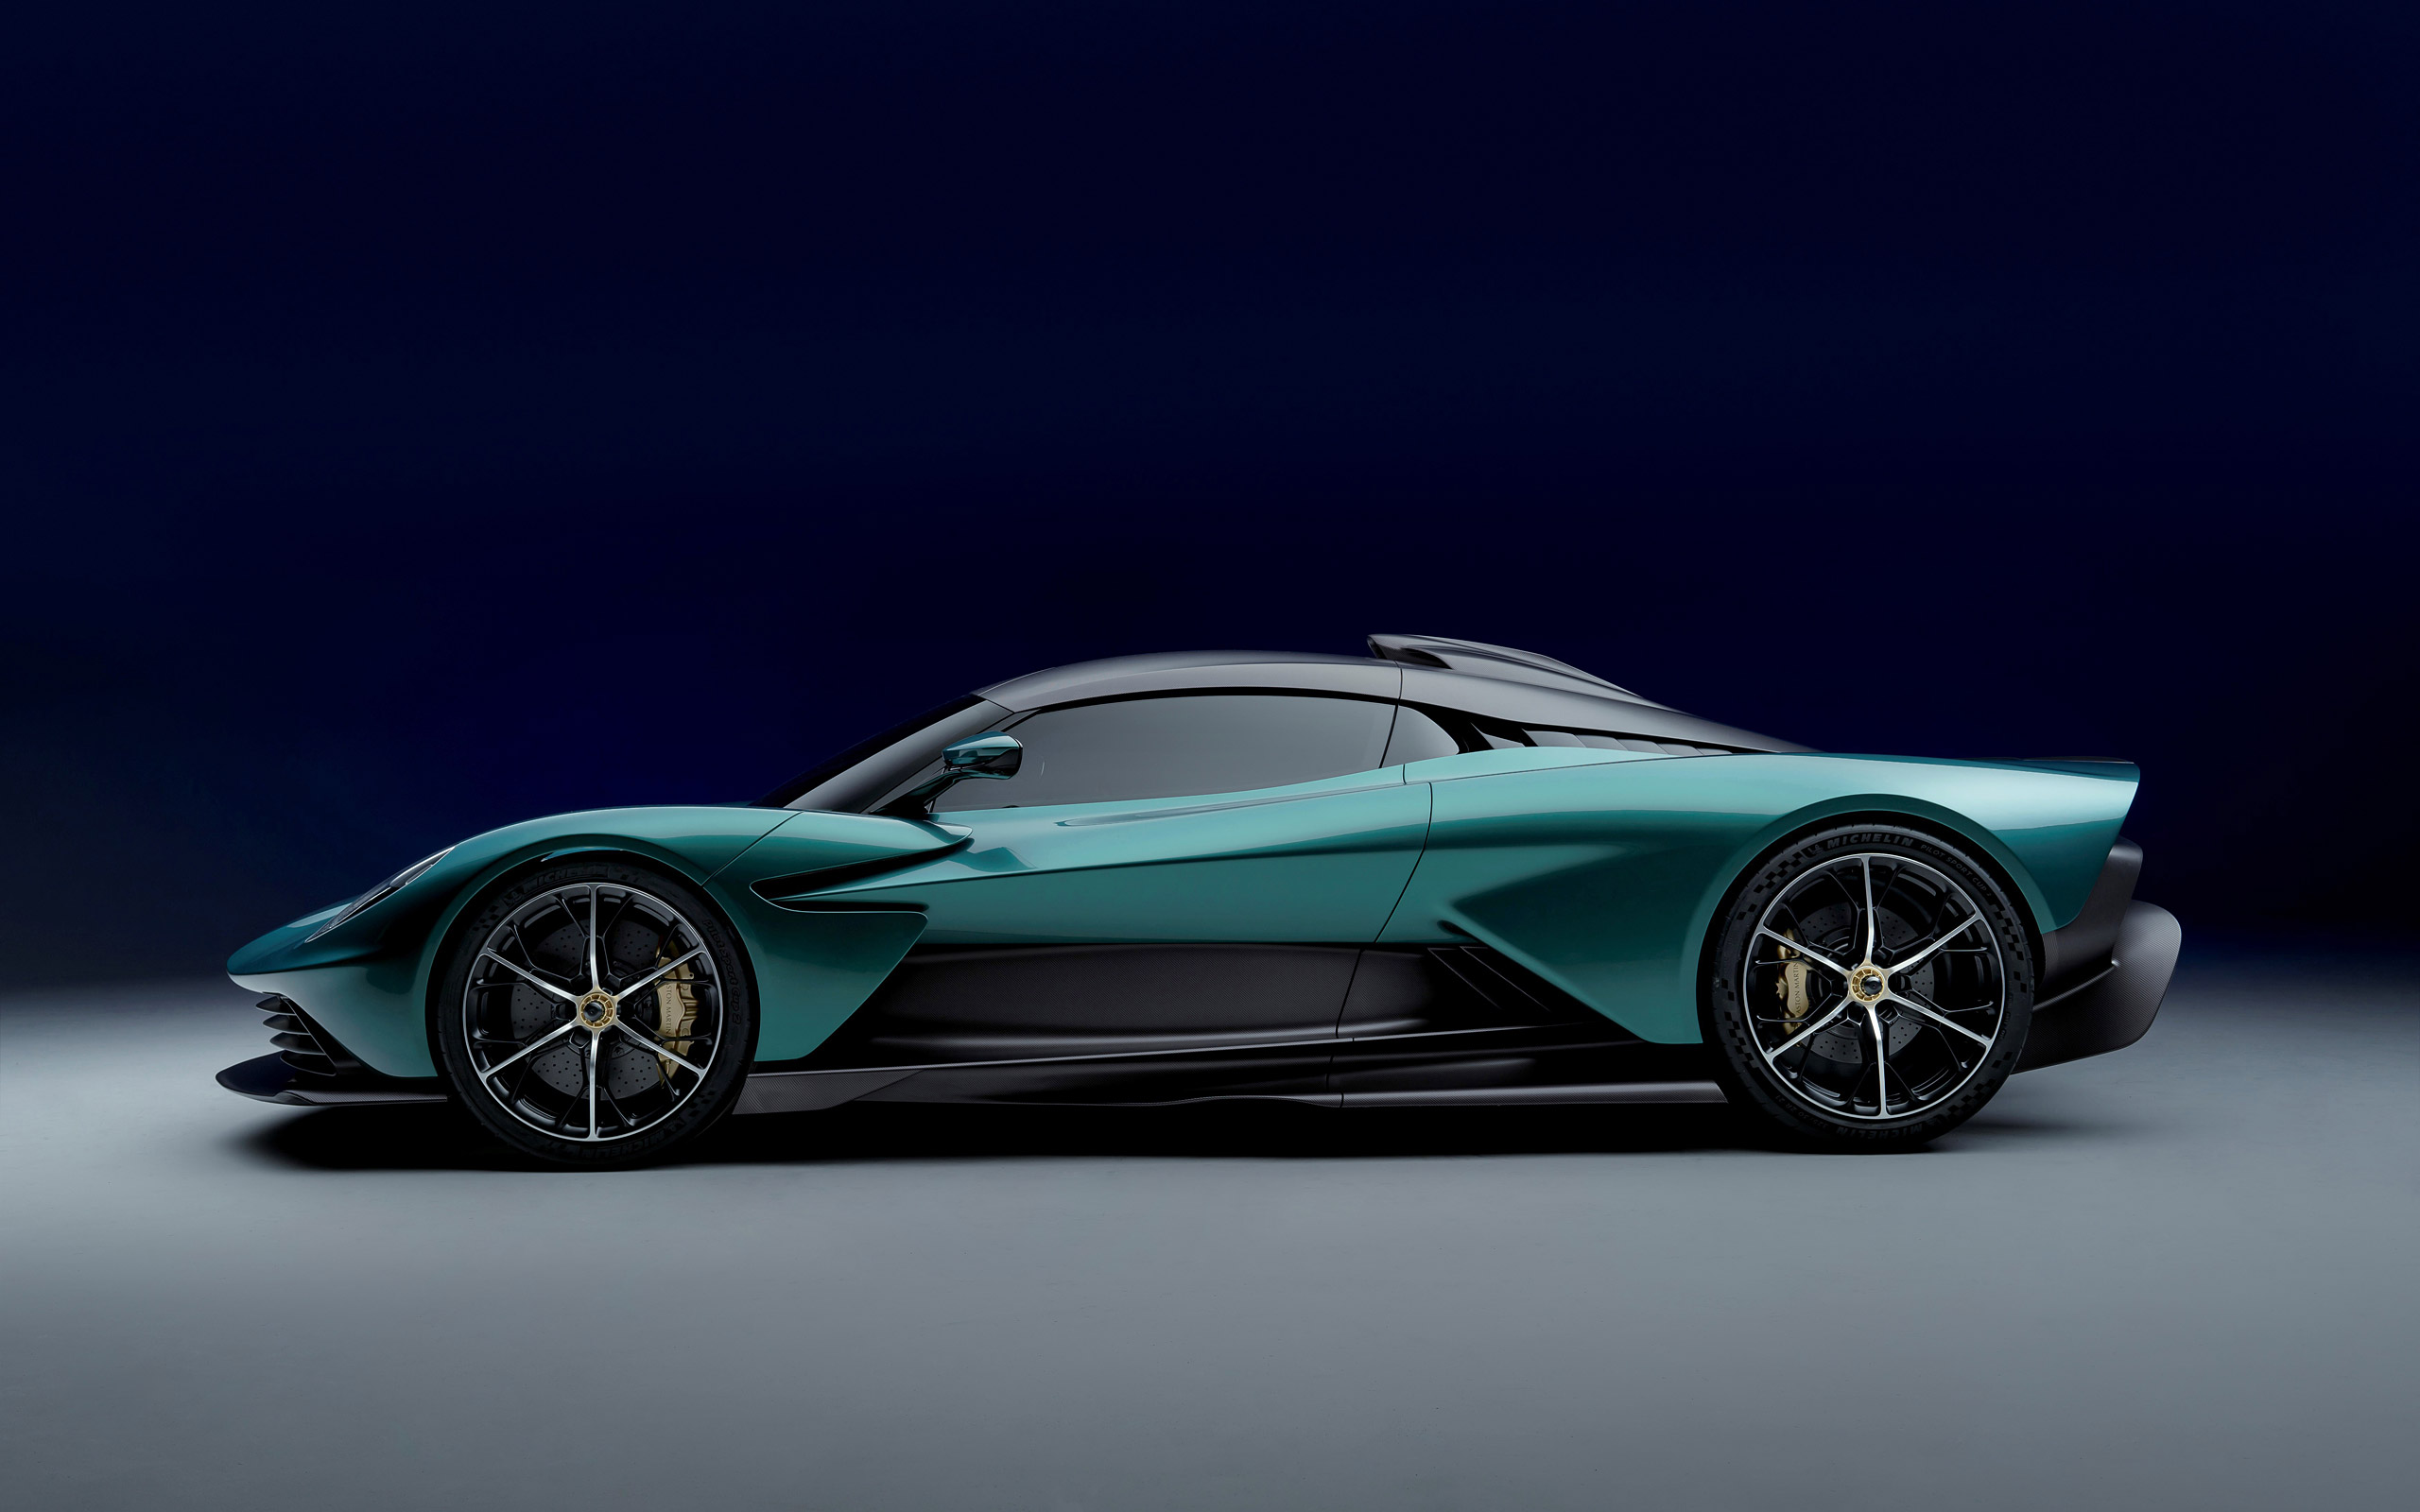  2022 Aston Martin Valhalla Wallpaper.